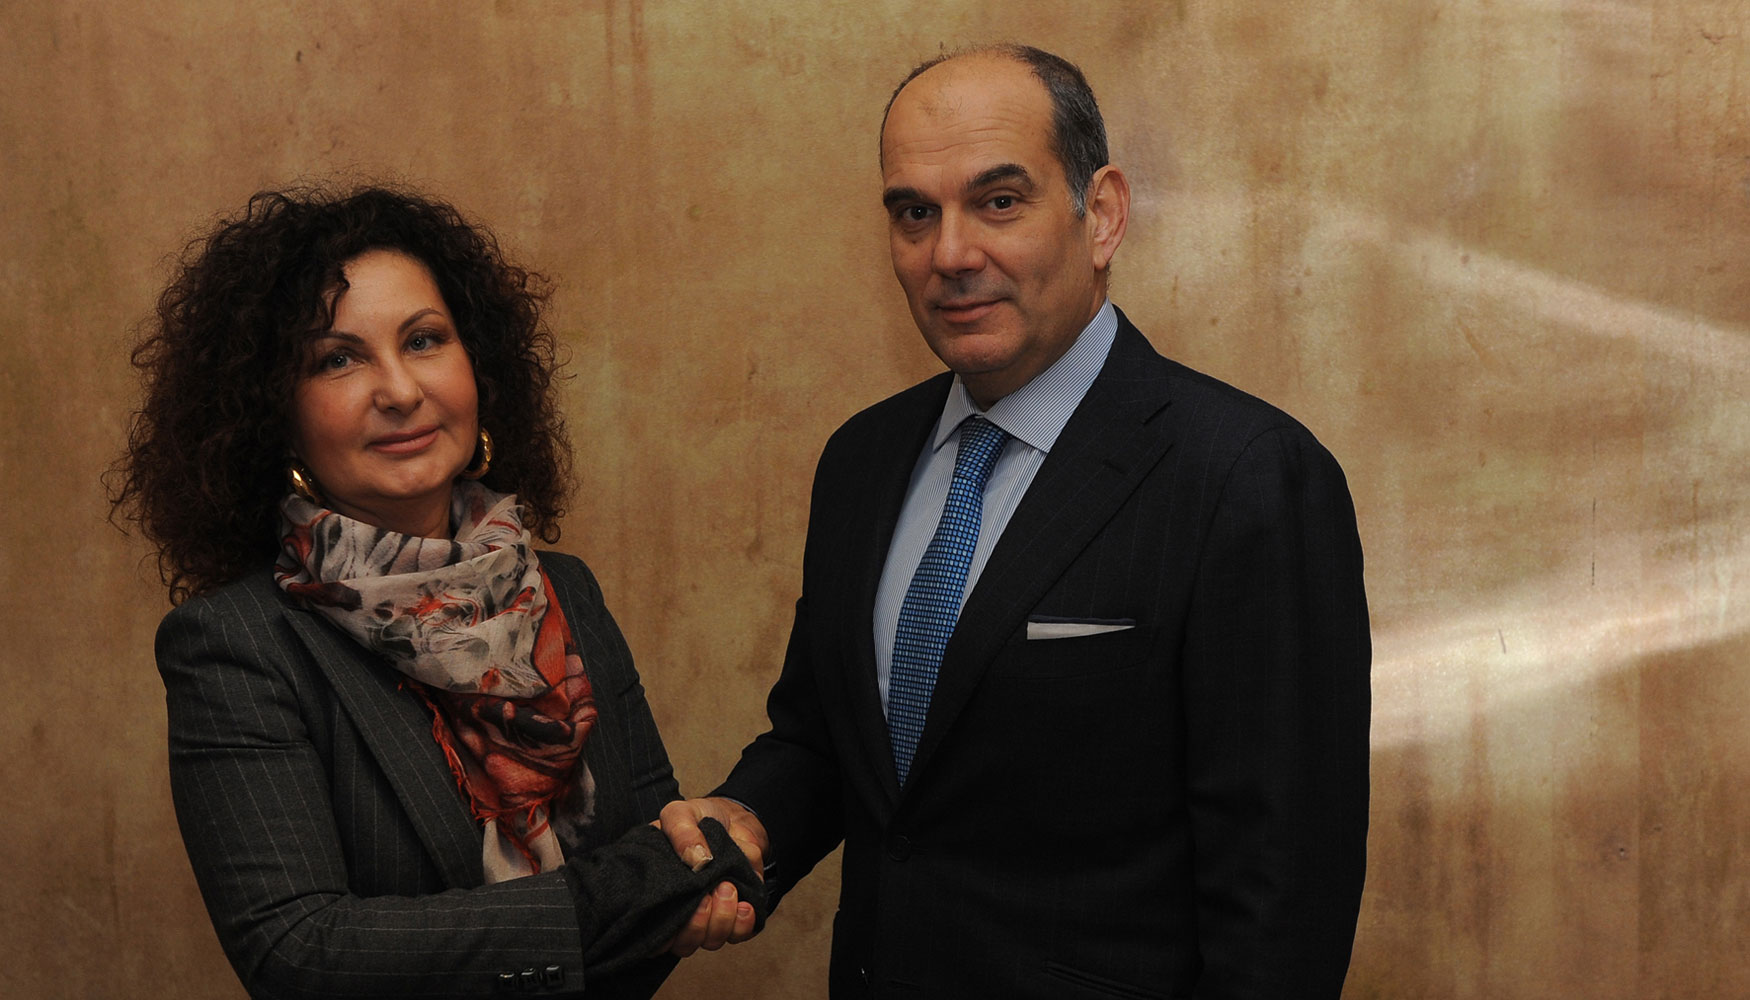 Sonia Bonfiglioli, presidenta de Bonfiglioli Riduttori SpA, y Enrico Carraro, presidente de Carraro SpA, durante la firma del acuerdo...